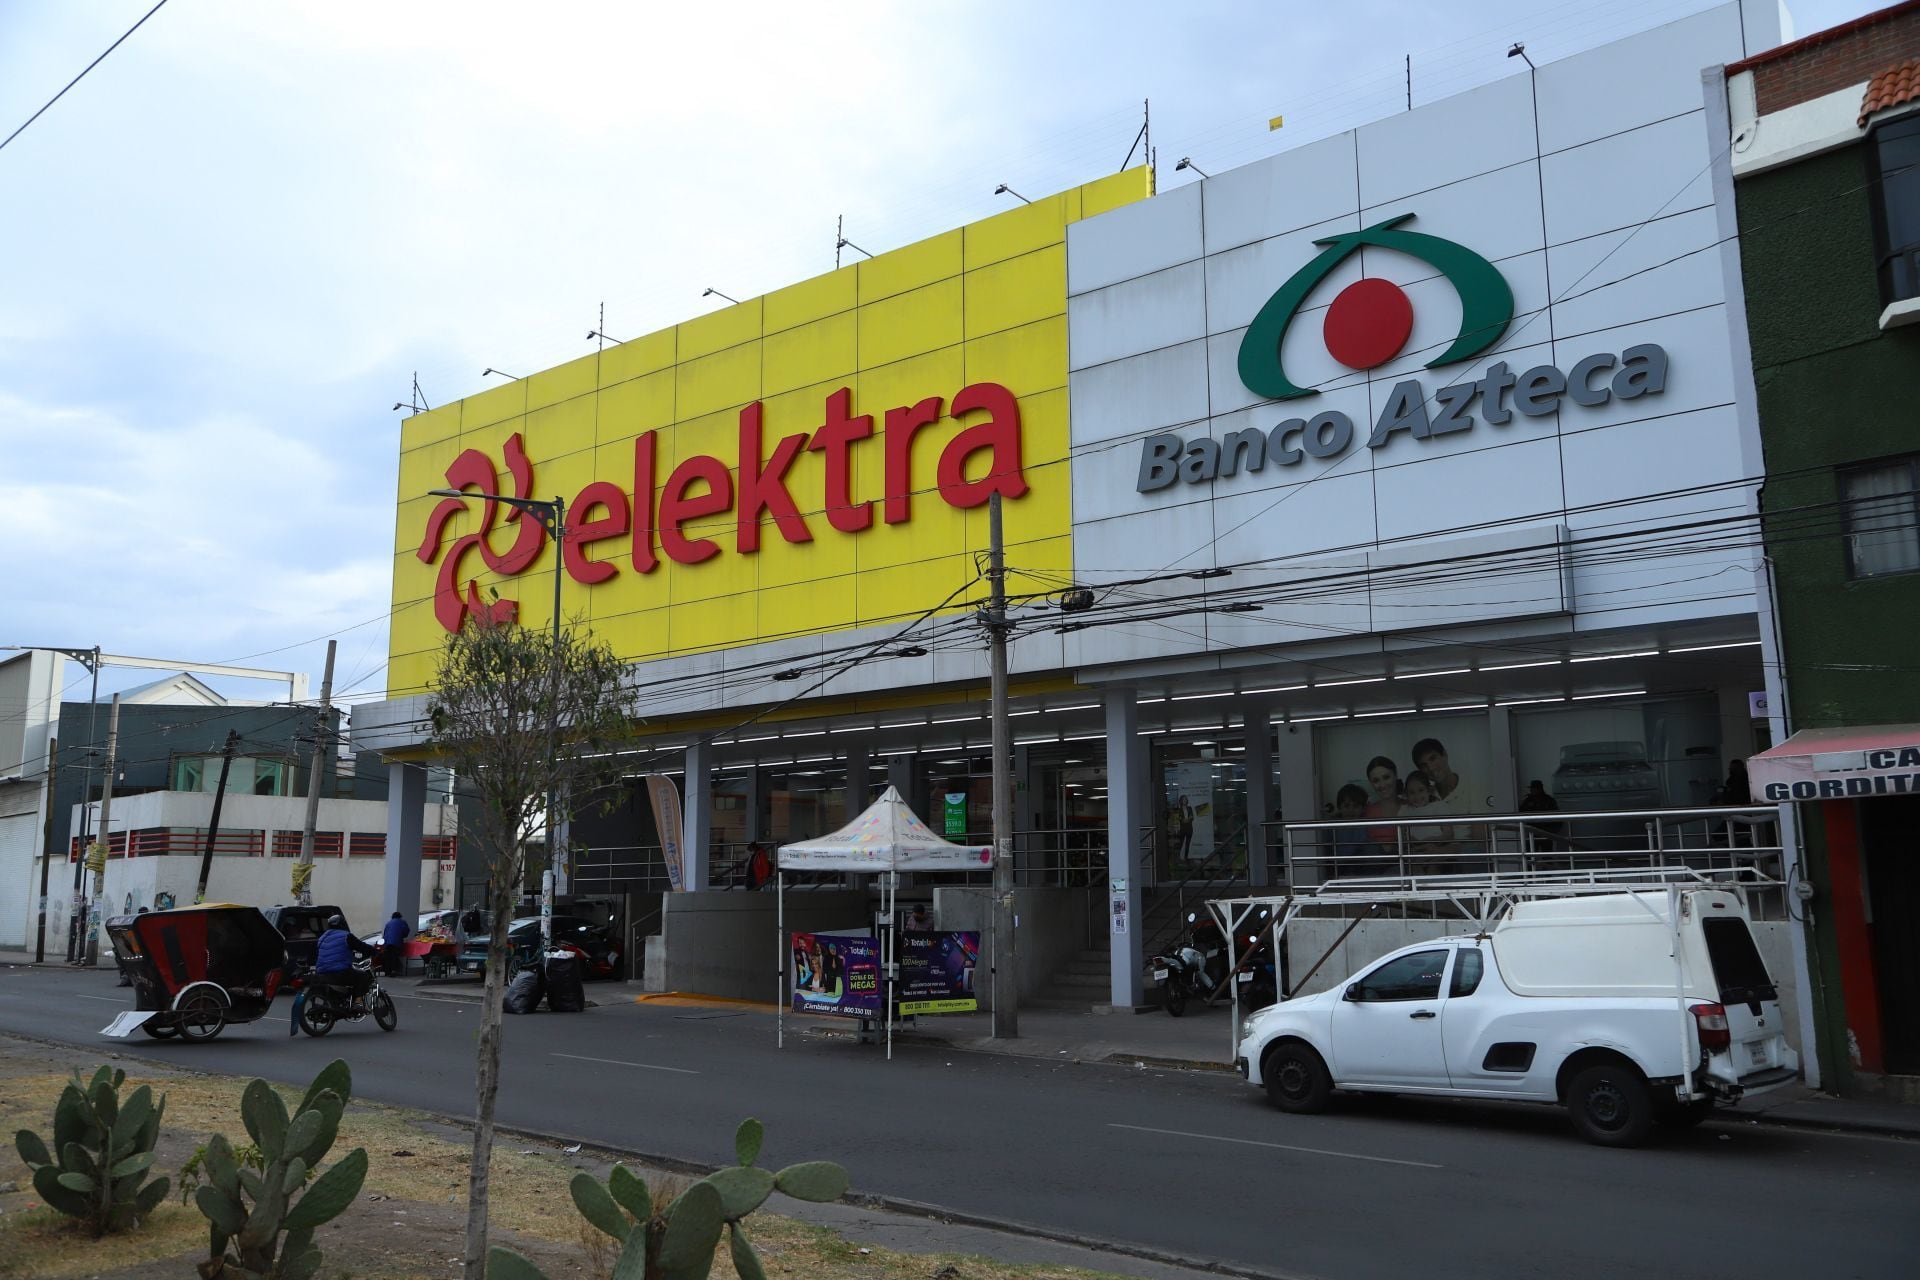 Elektra/Banco Azteca